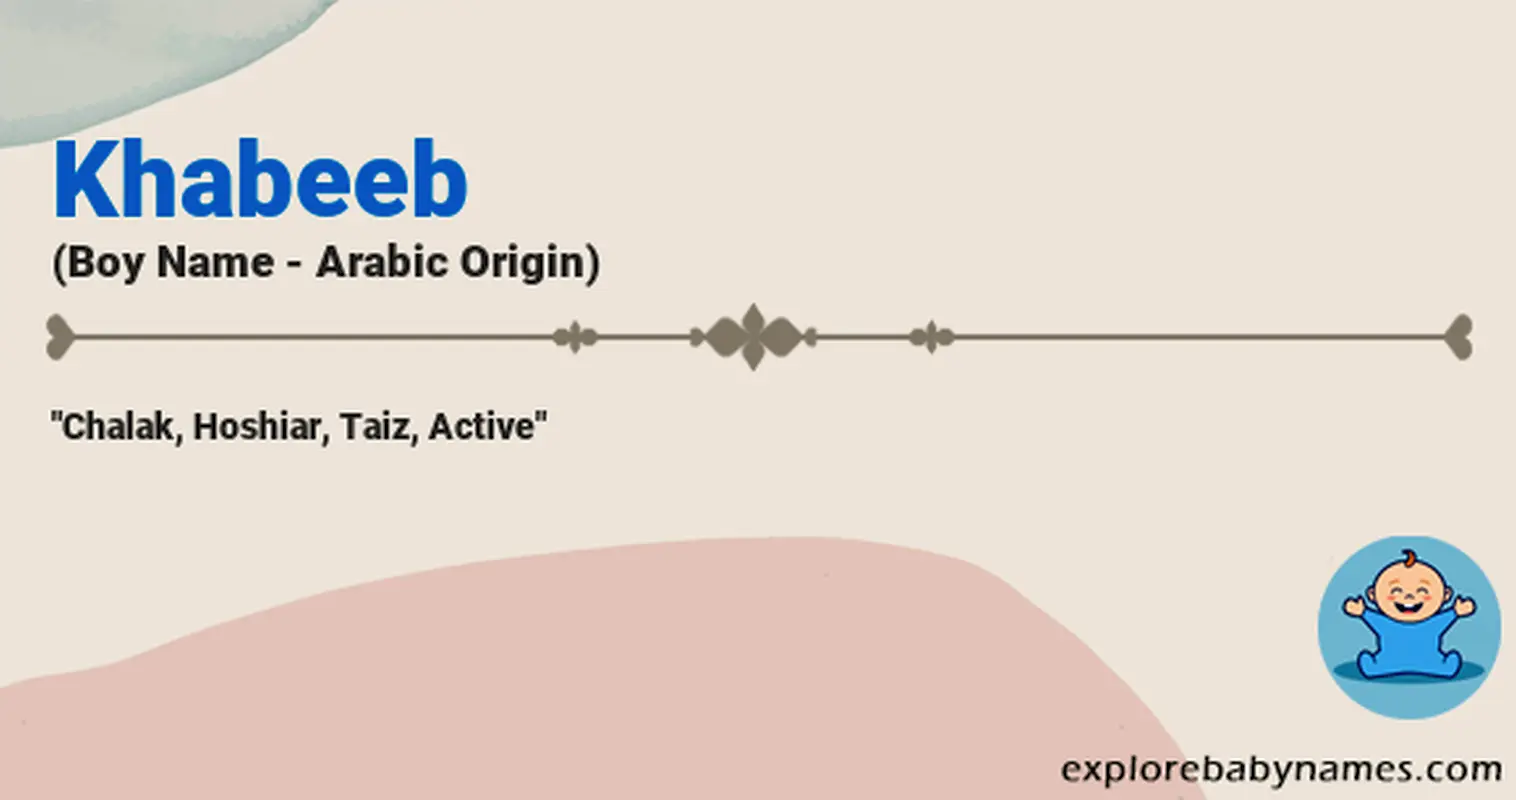 Meaning of Khabeeb